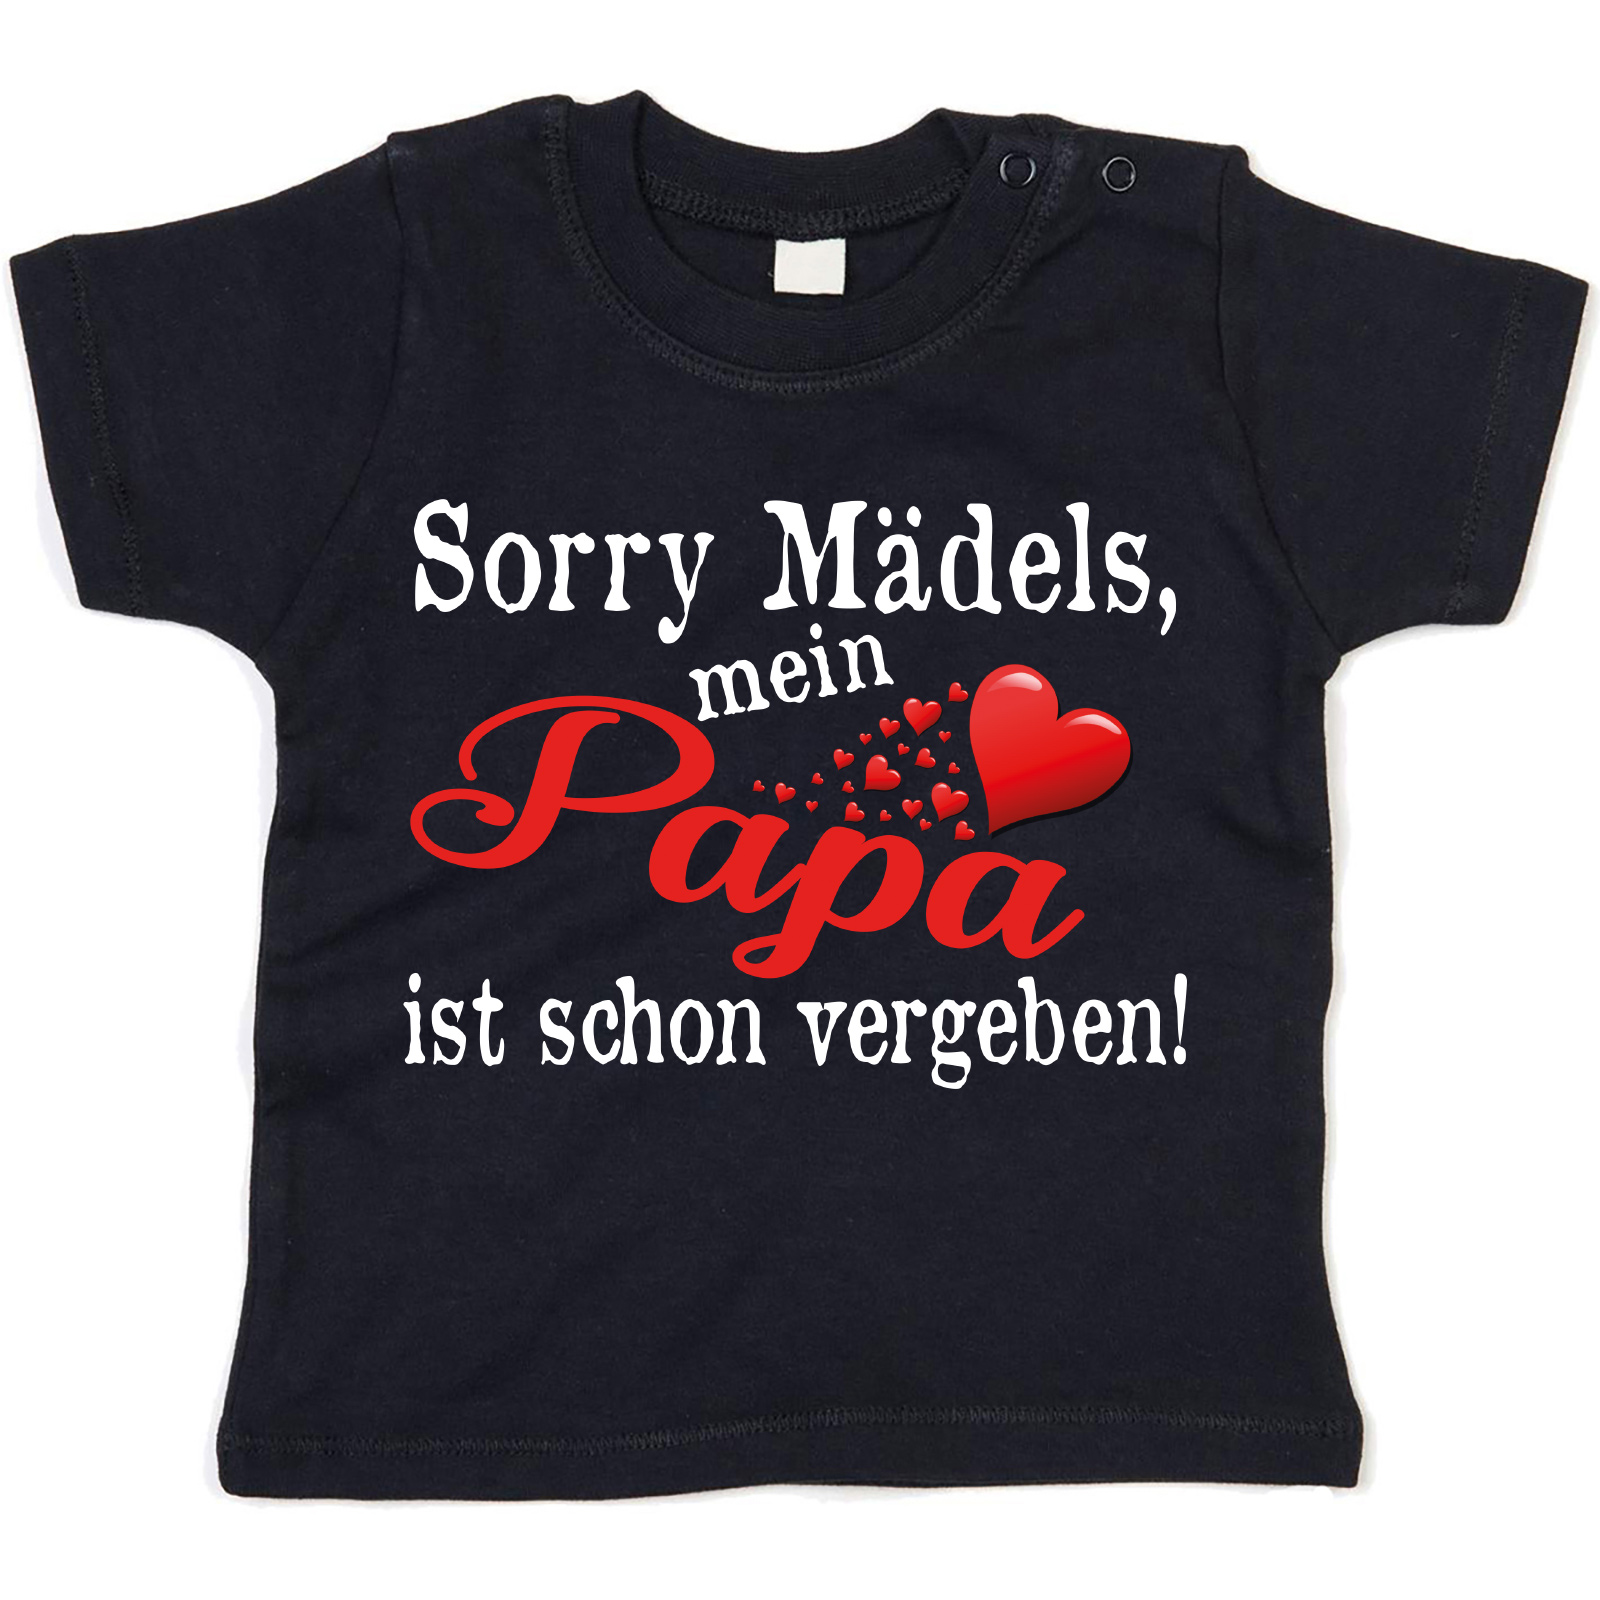 Kinder Babyshirt Modell Sorry Mädels mein Papa ist vergeben  - Onlineshop LieblingsMensch